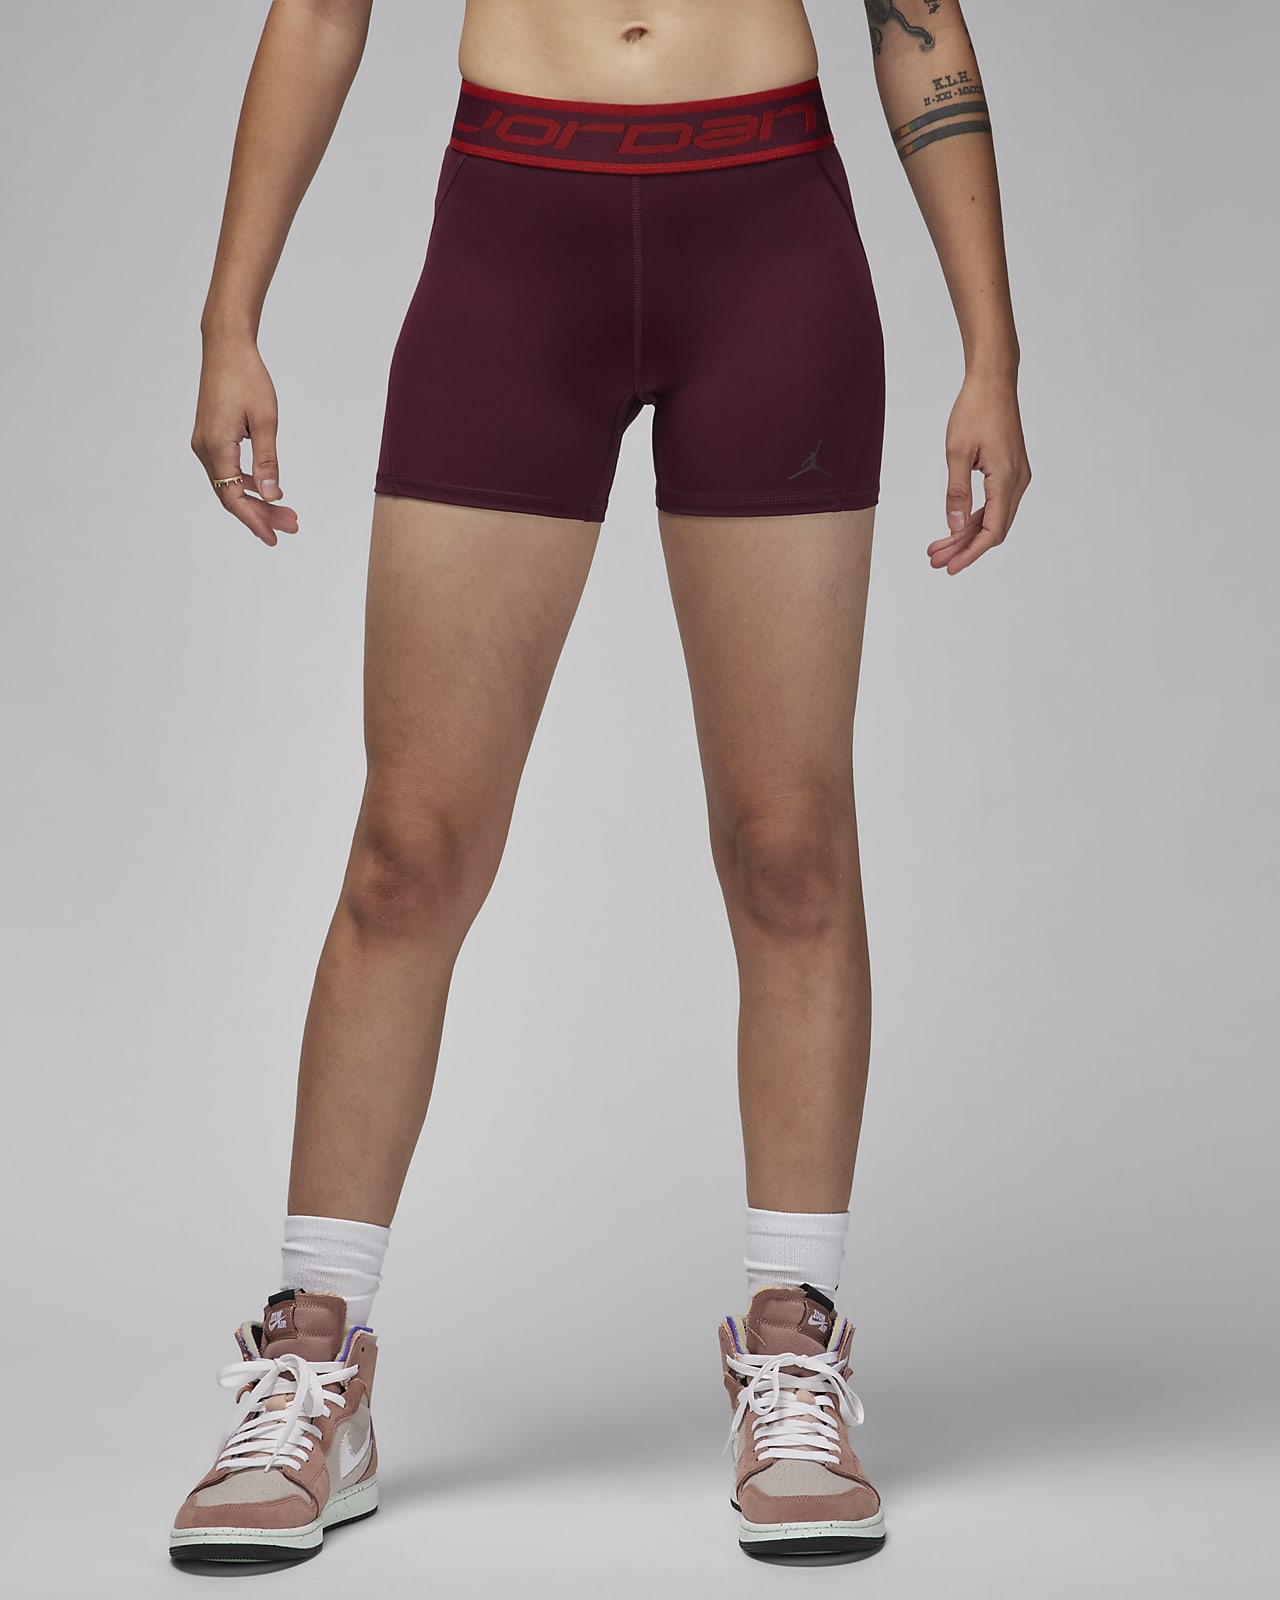 Jordan Sport Women's 13cm (approx.) Shorts